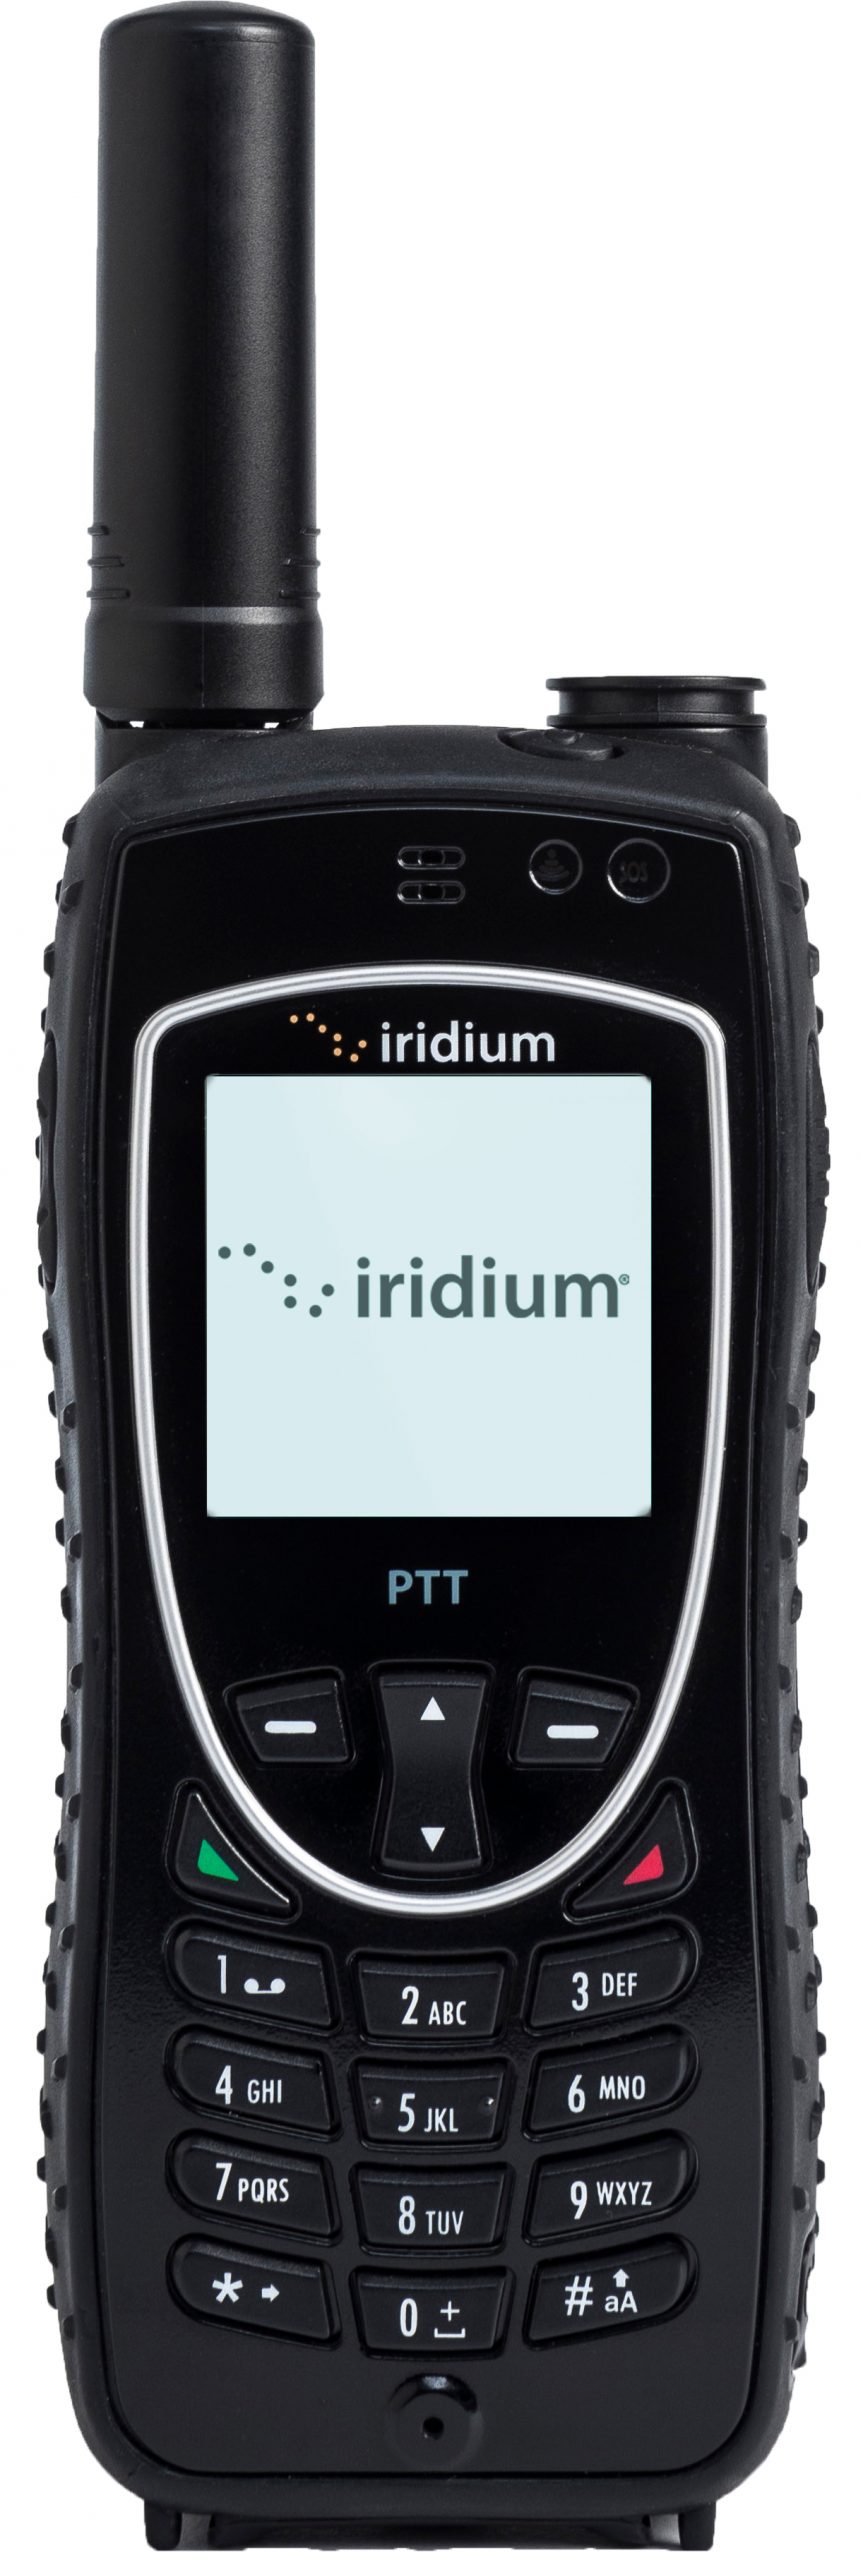 Iridium Extreme PTT device